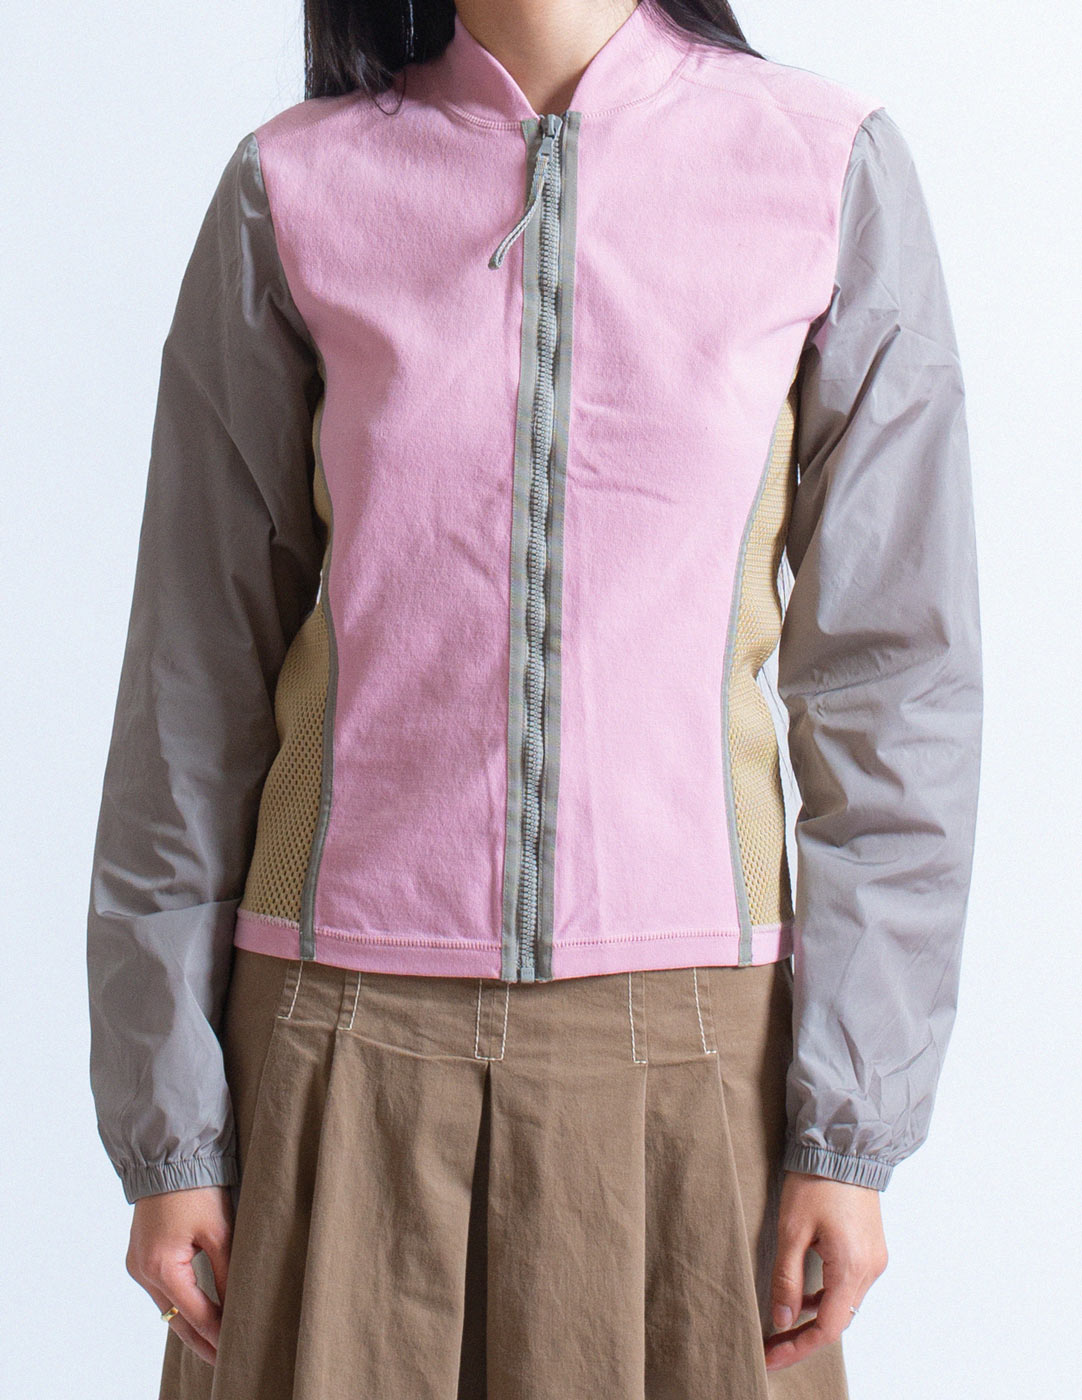 Prada Sport vintage pink and gray track suit detail